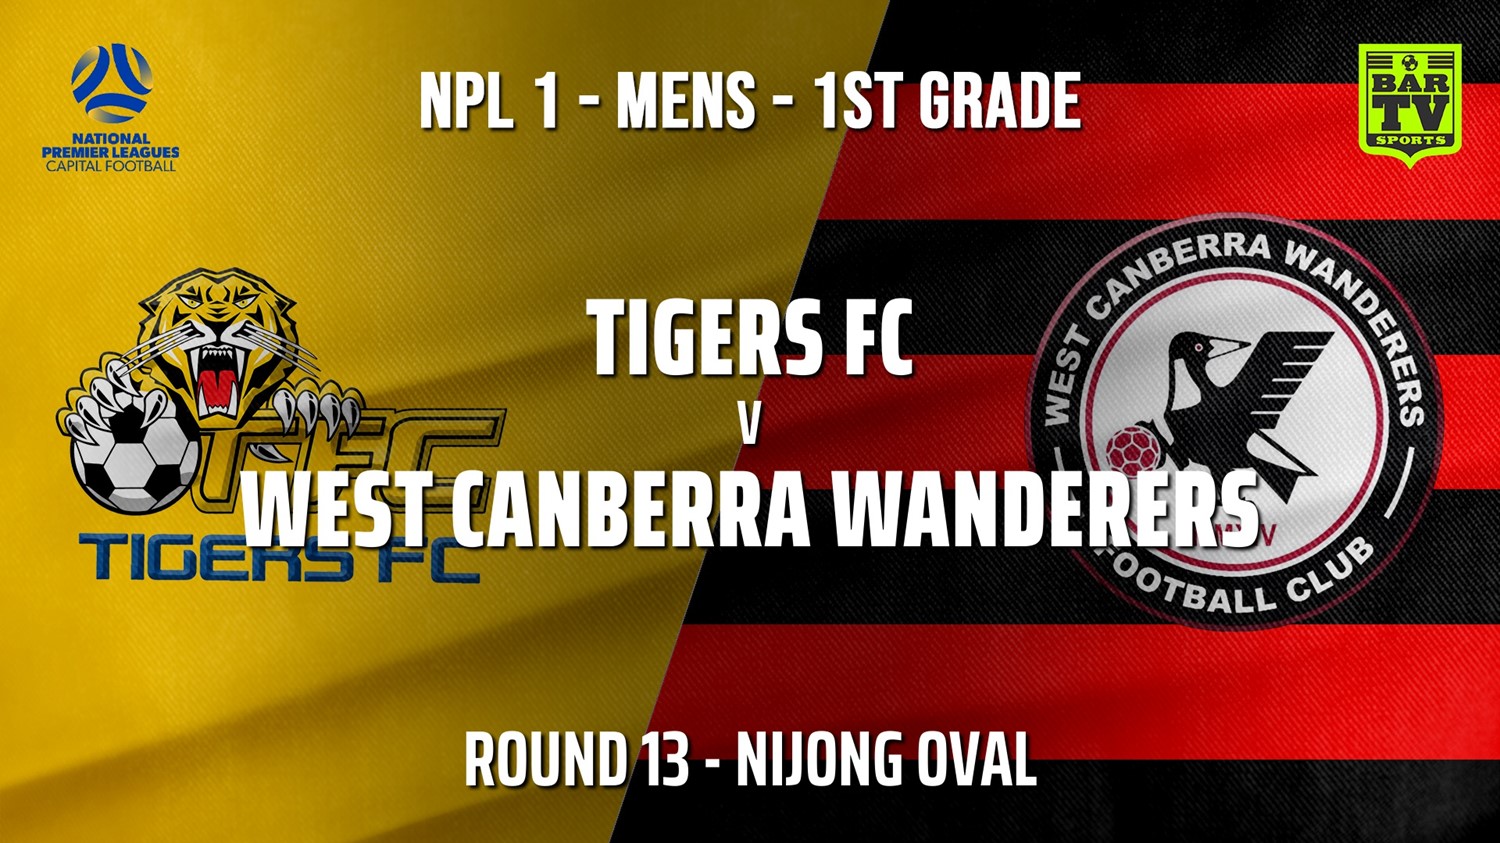 210711-Capital NPL Round 13 - Tigers FC v West Canberra Wanderers Minigame Slate Image